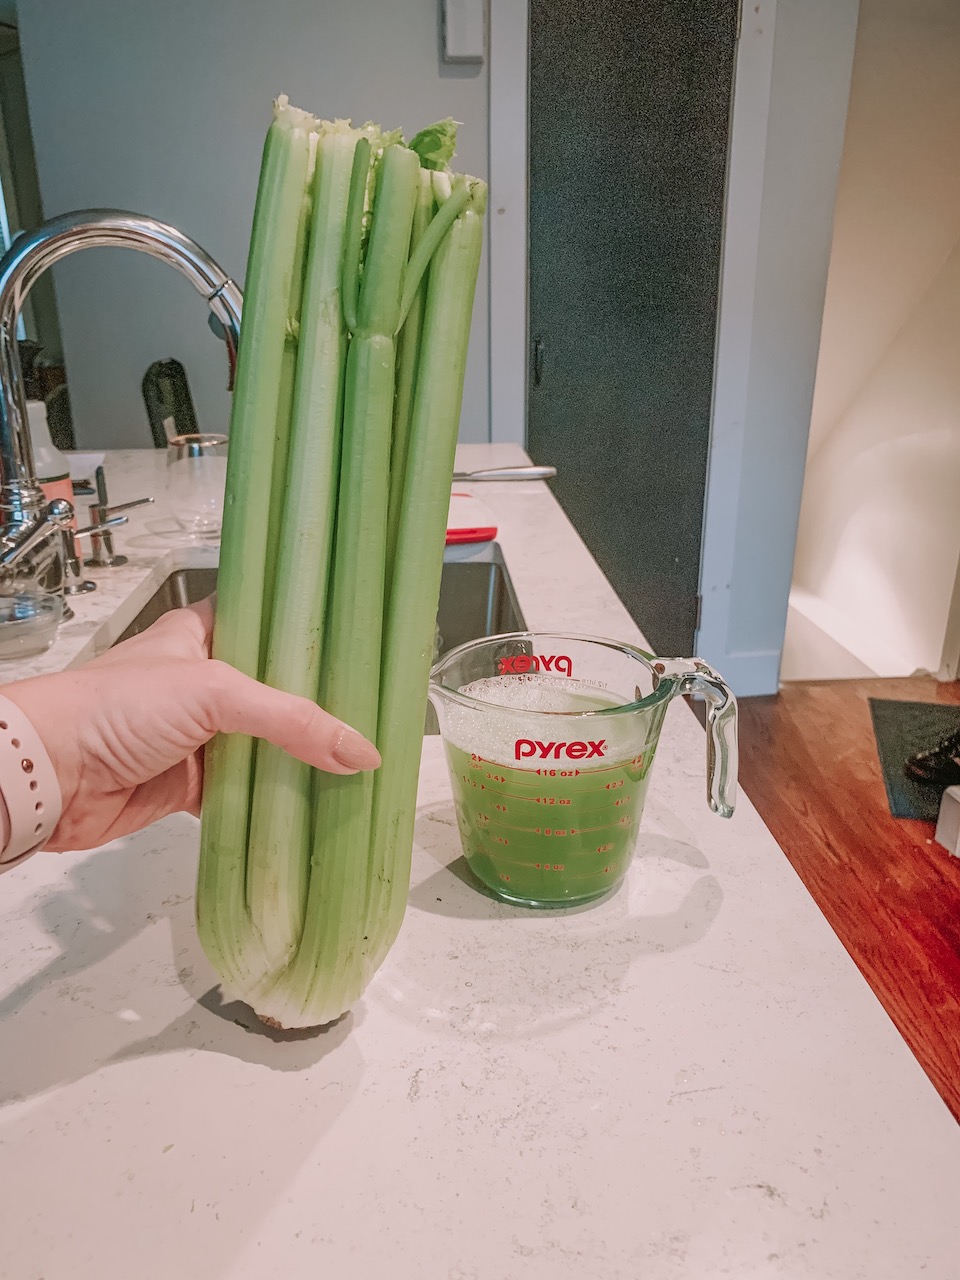 Mastery Ydeevne rygte How I Make Celery Juice Without a Juicer - Rach Martino